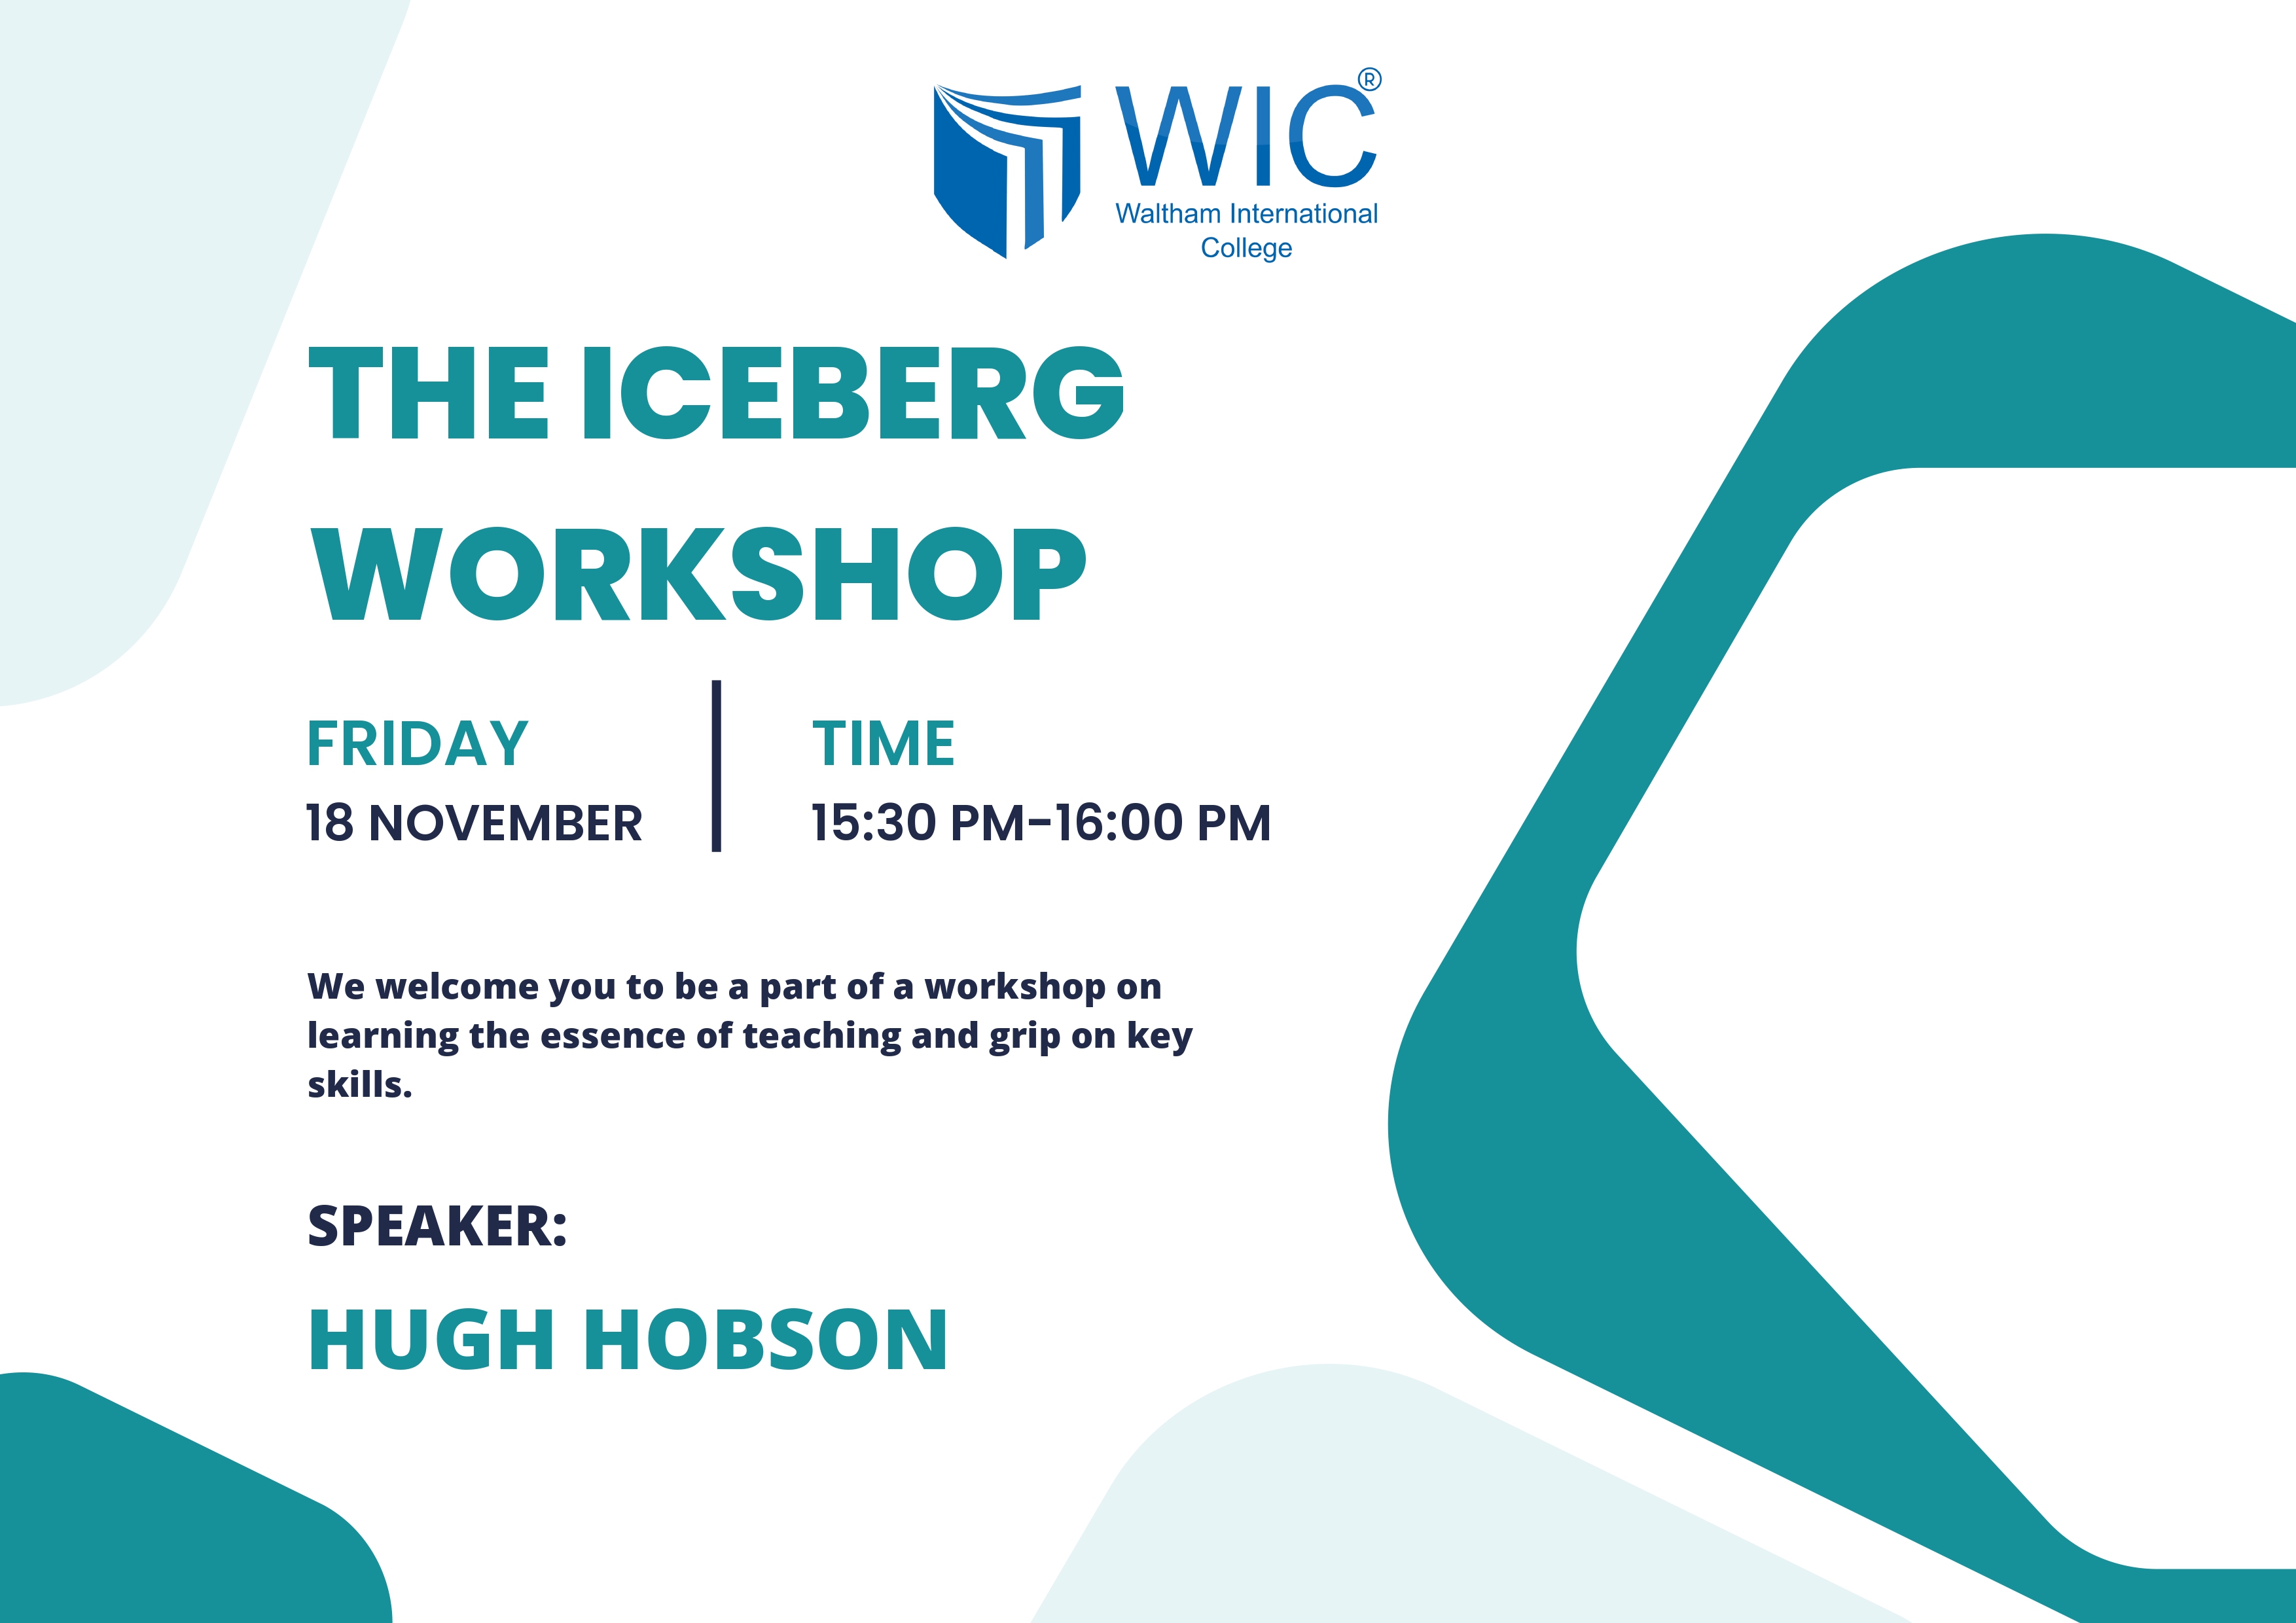 The Iceberg Workshop